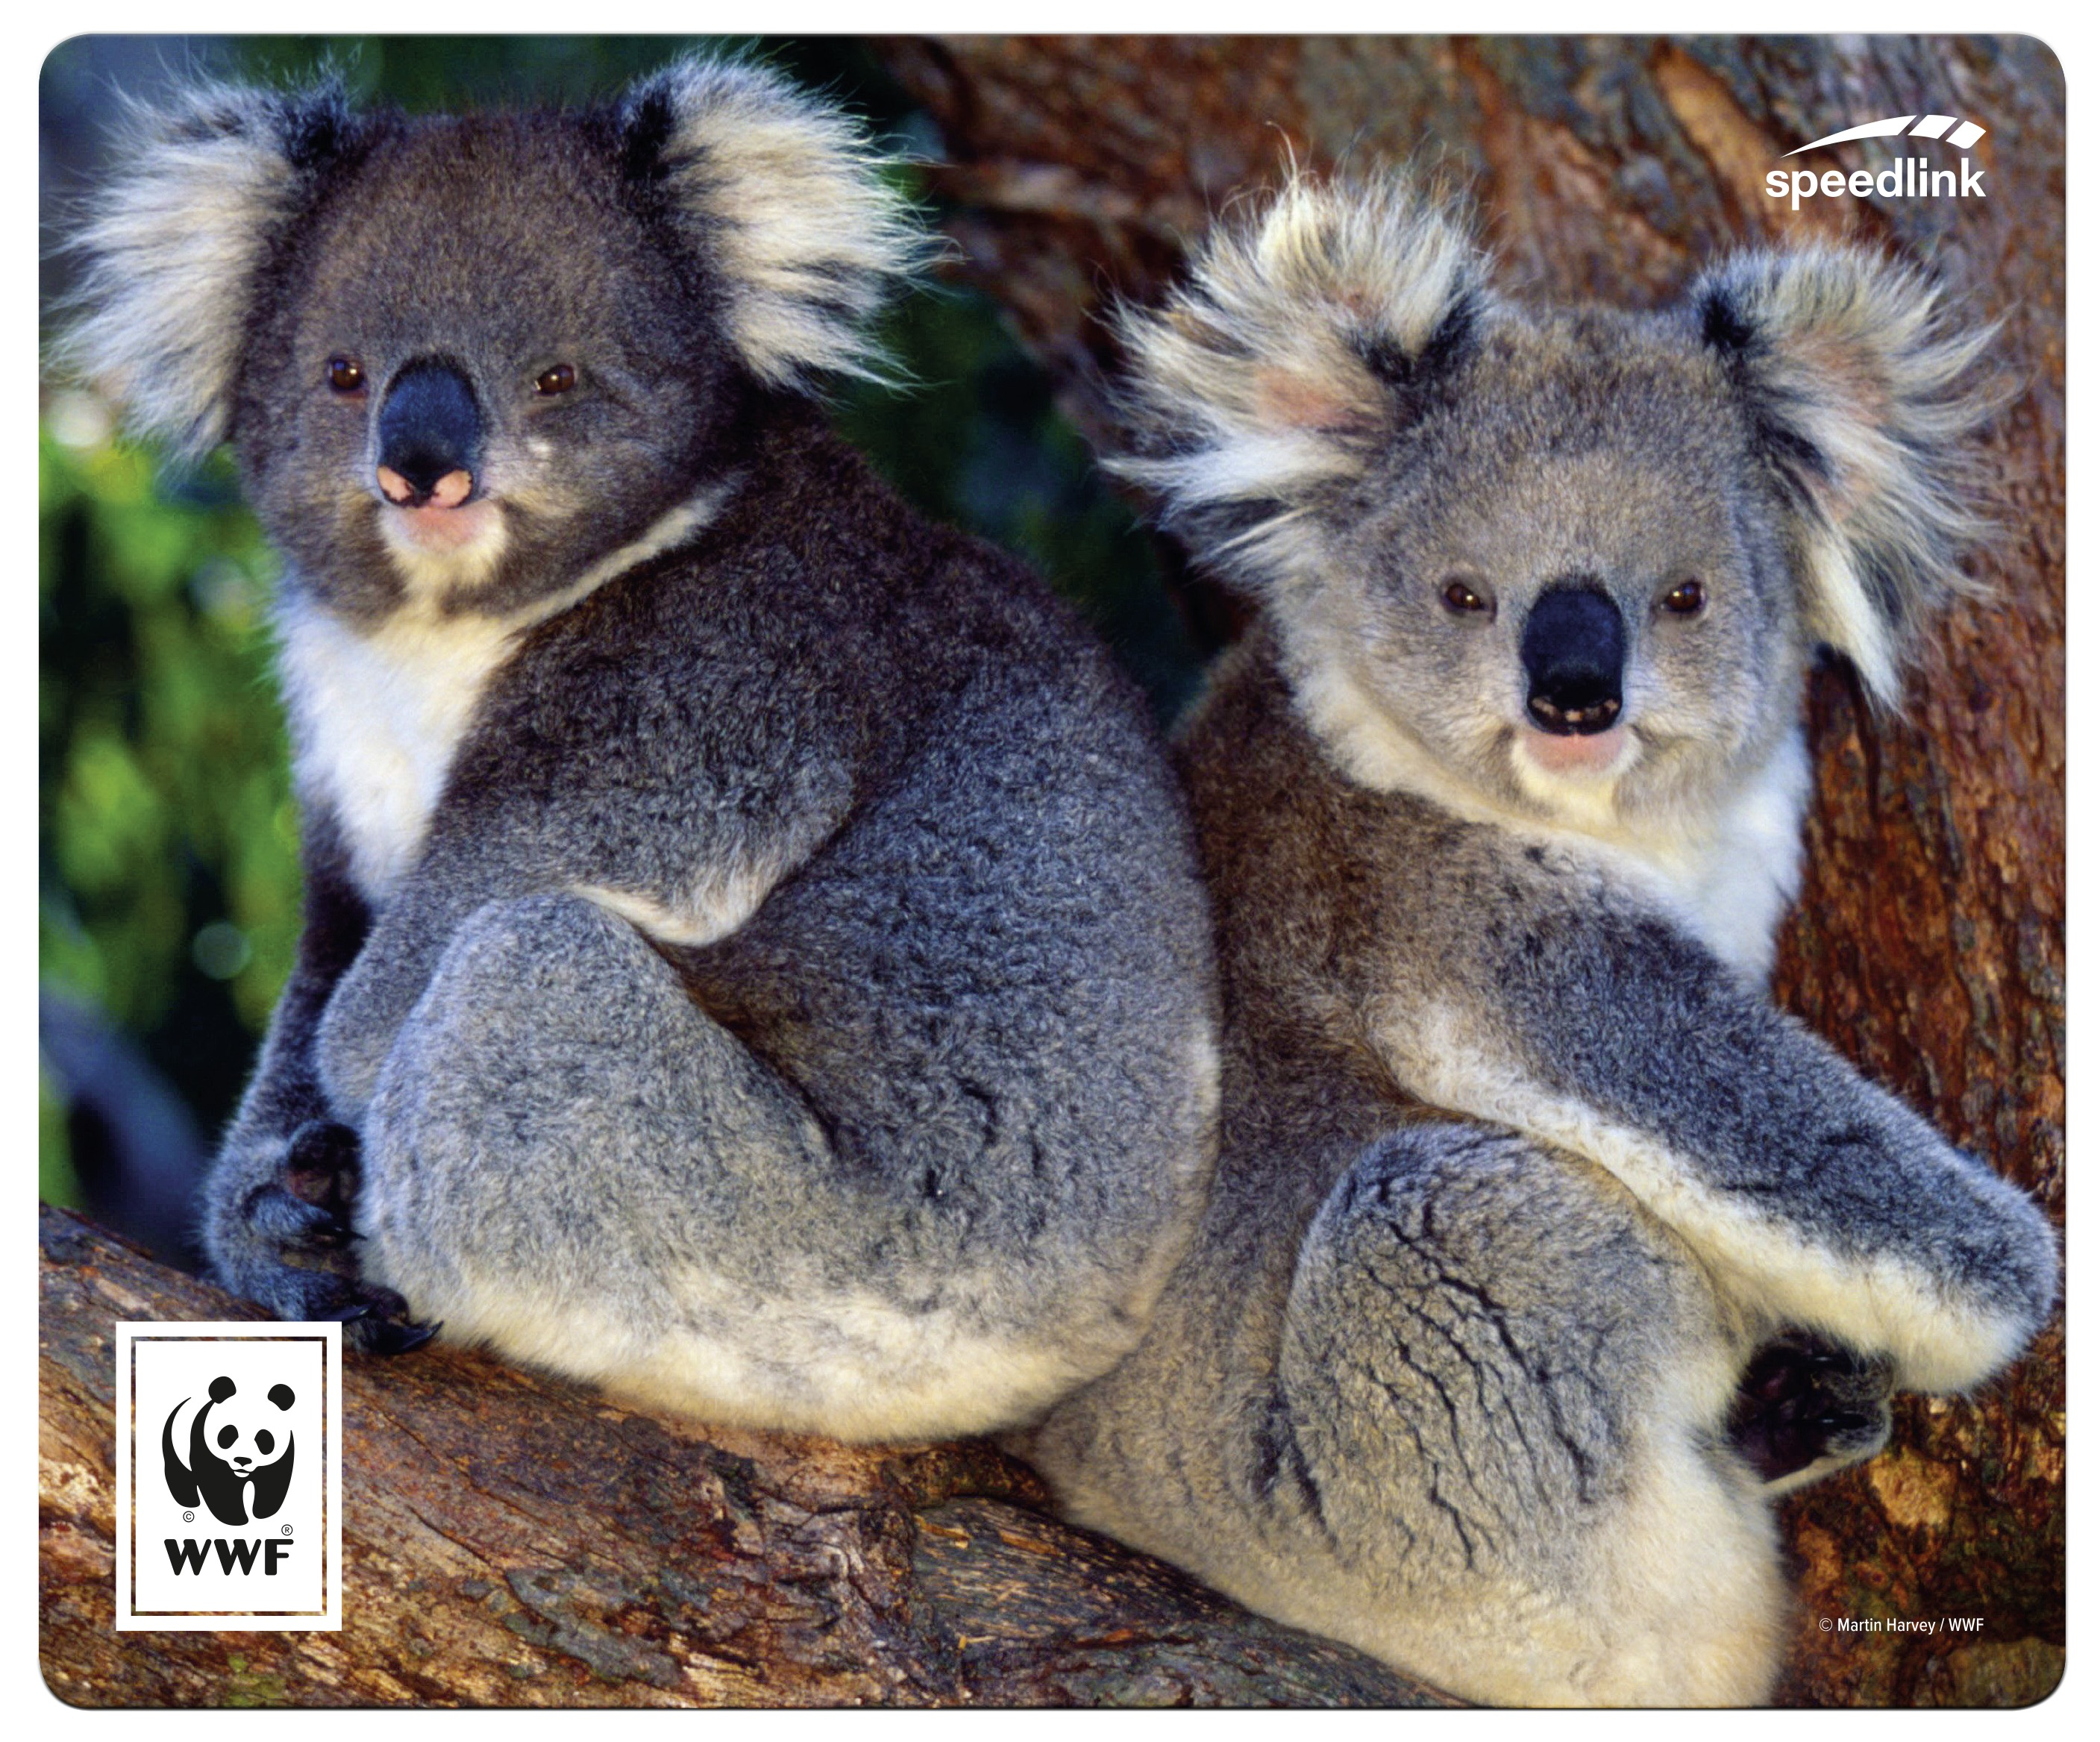 TERRA Koala, Mehrfarbig WWF SPEEDLINK